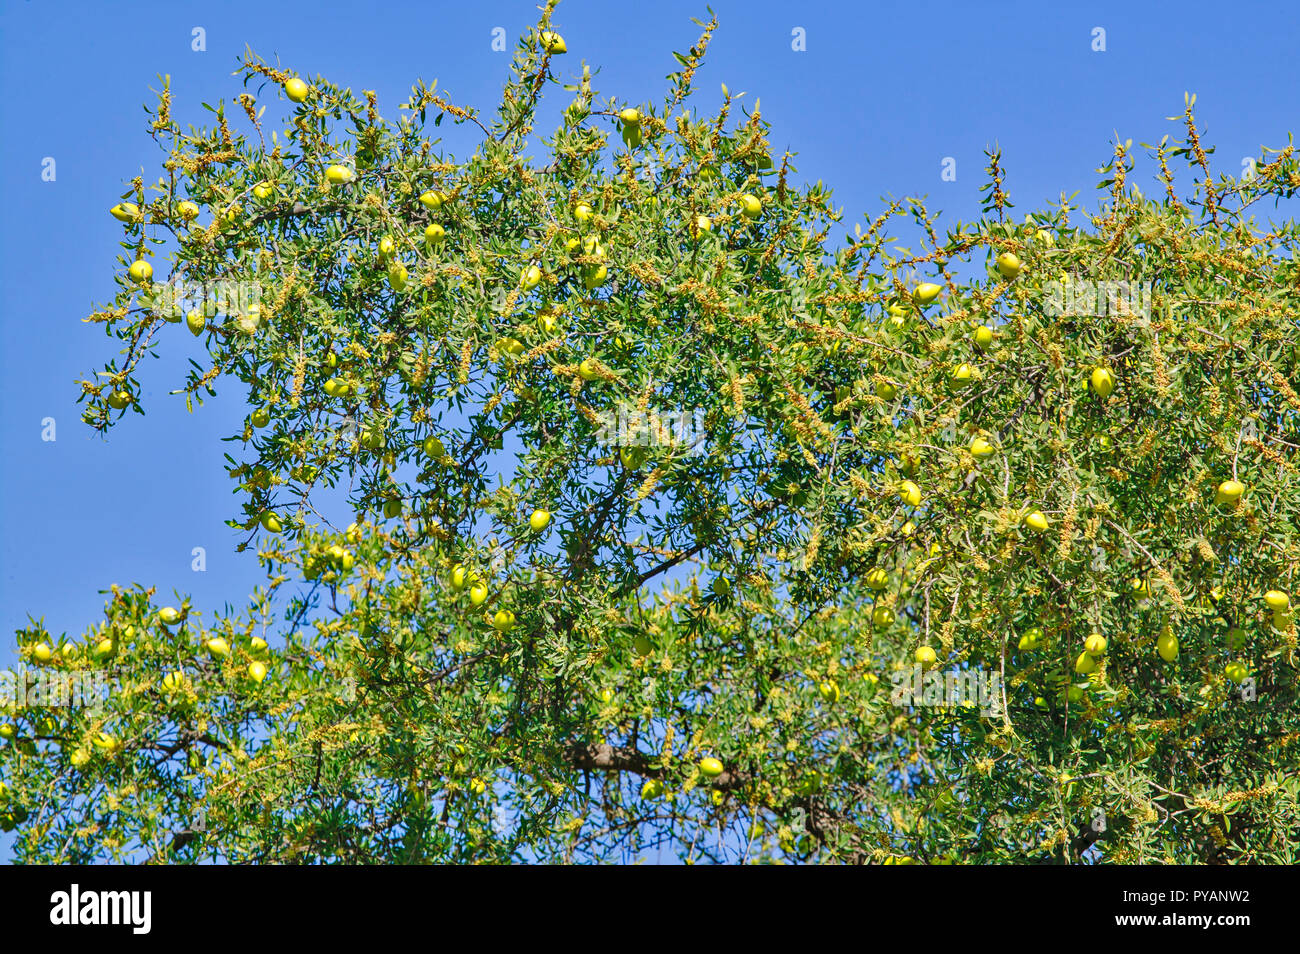 MOROCCO SOUS VALLEY ARGAN TREE AND YELLOW FRUIT ARGANIA SPINOSA Stock Photo